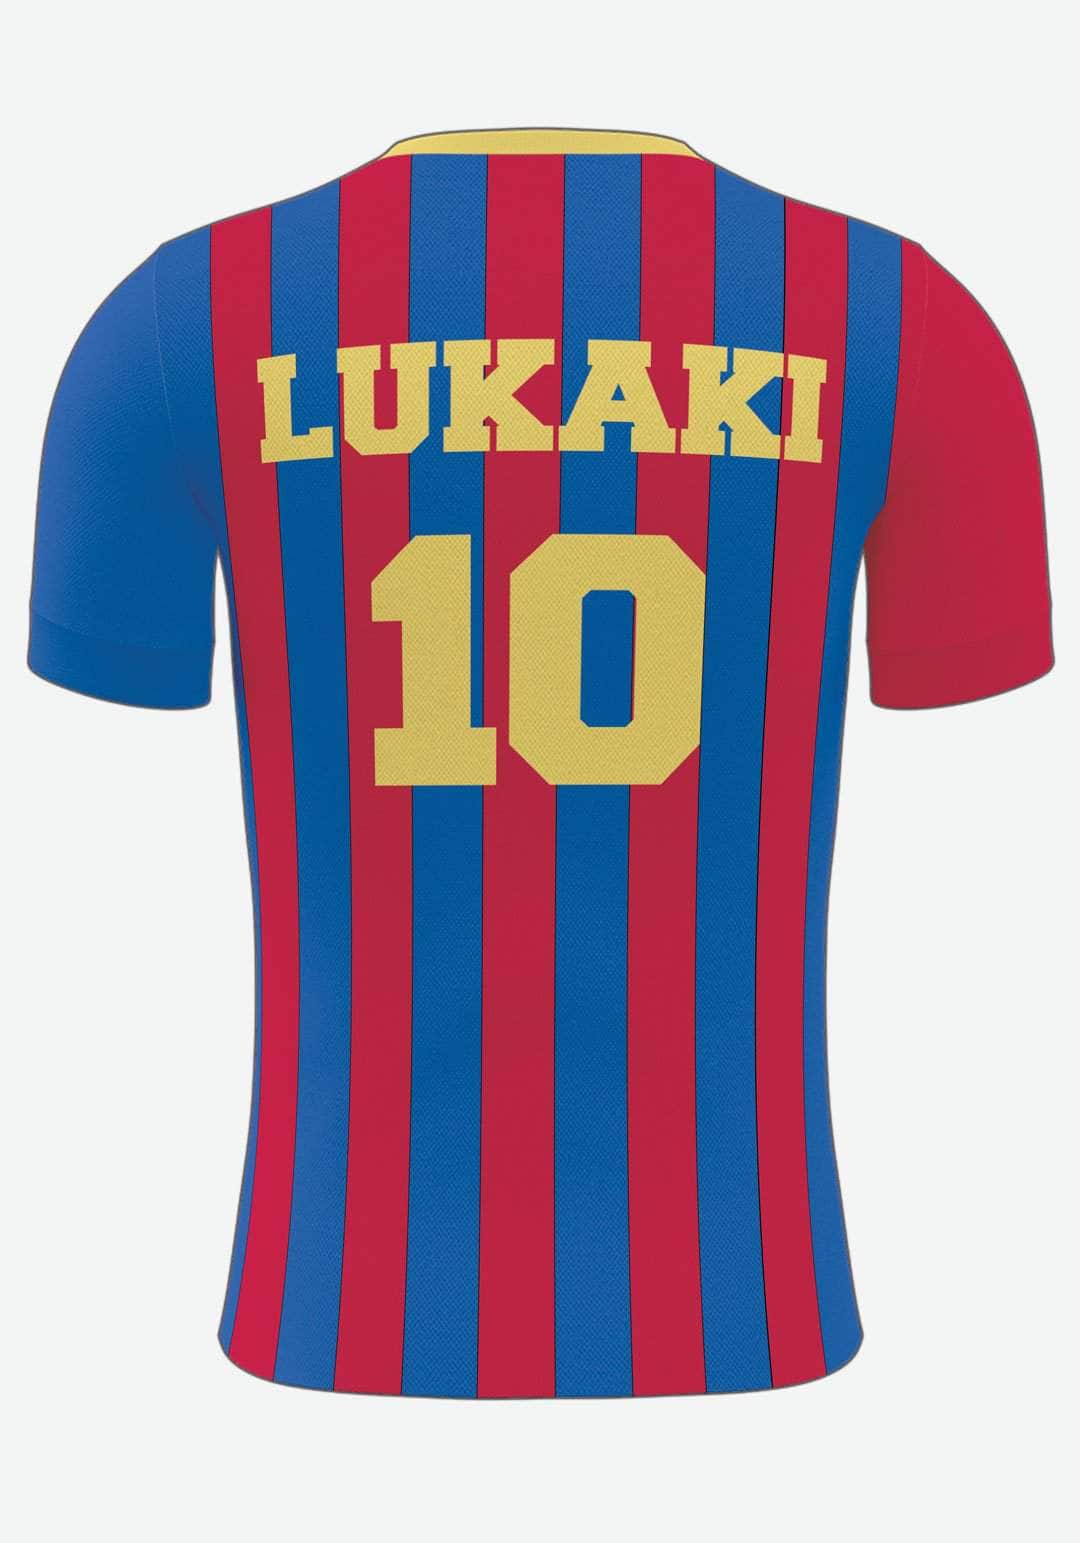 Se Barcelona Fodbold plakat - med eget navn og nummer, 50x70 hos Lukaki.dk